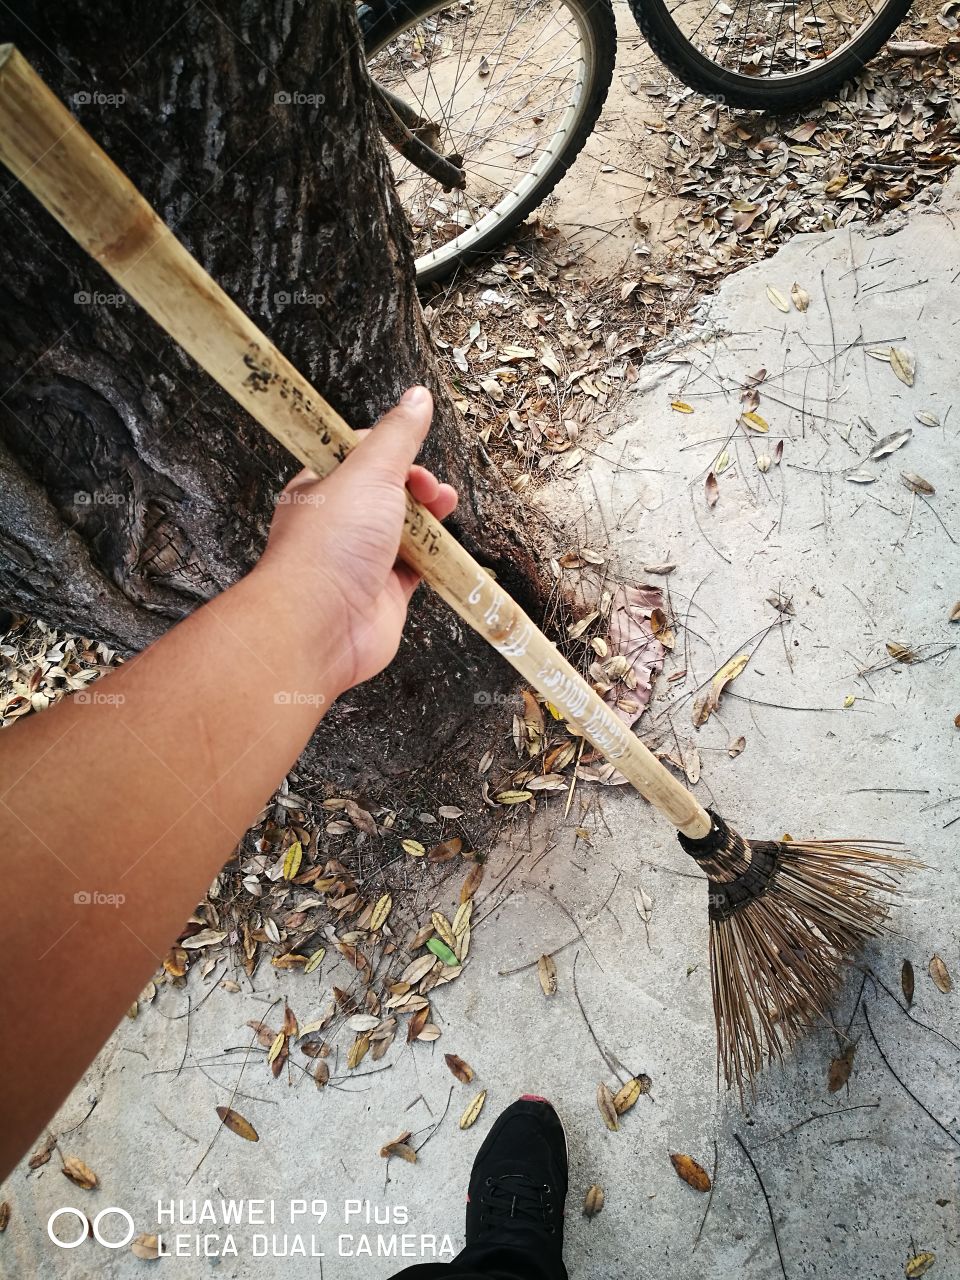 my broom